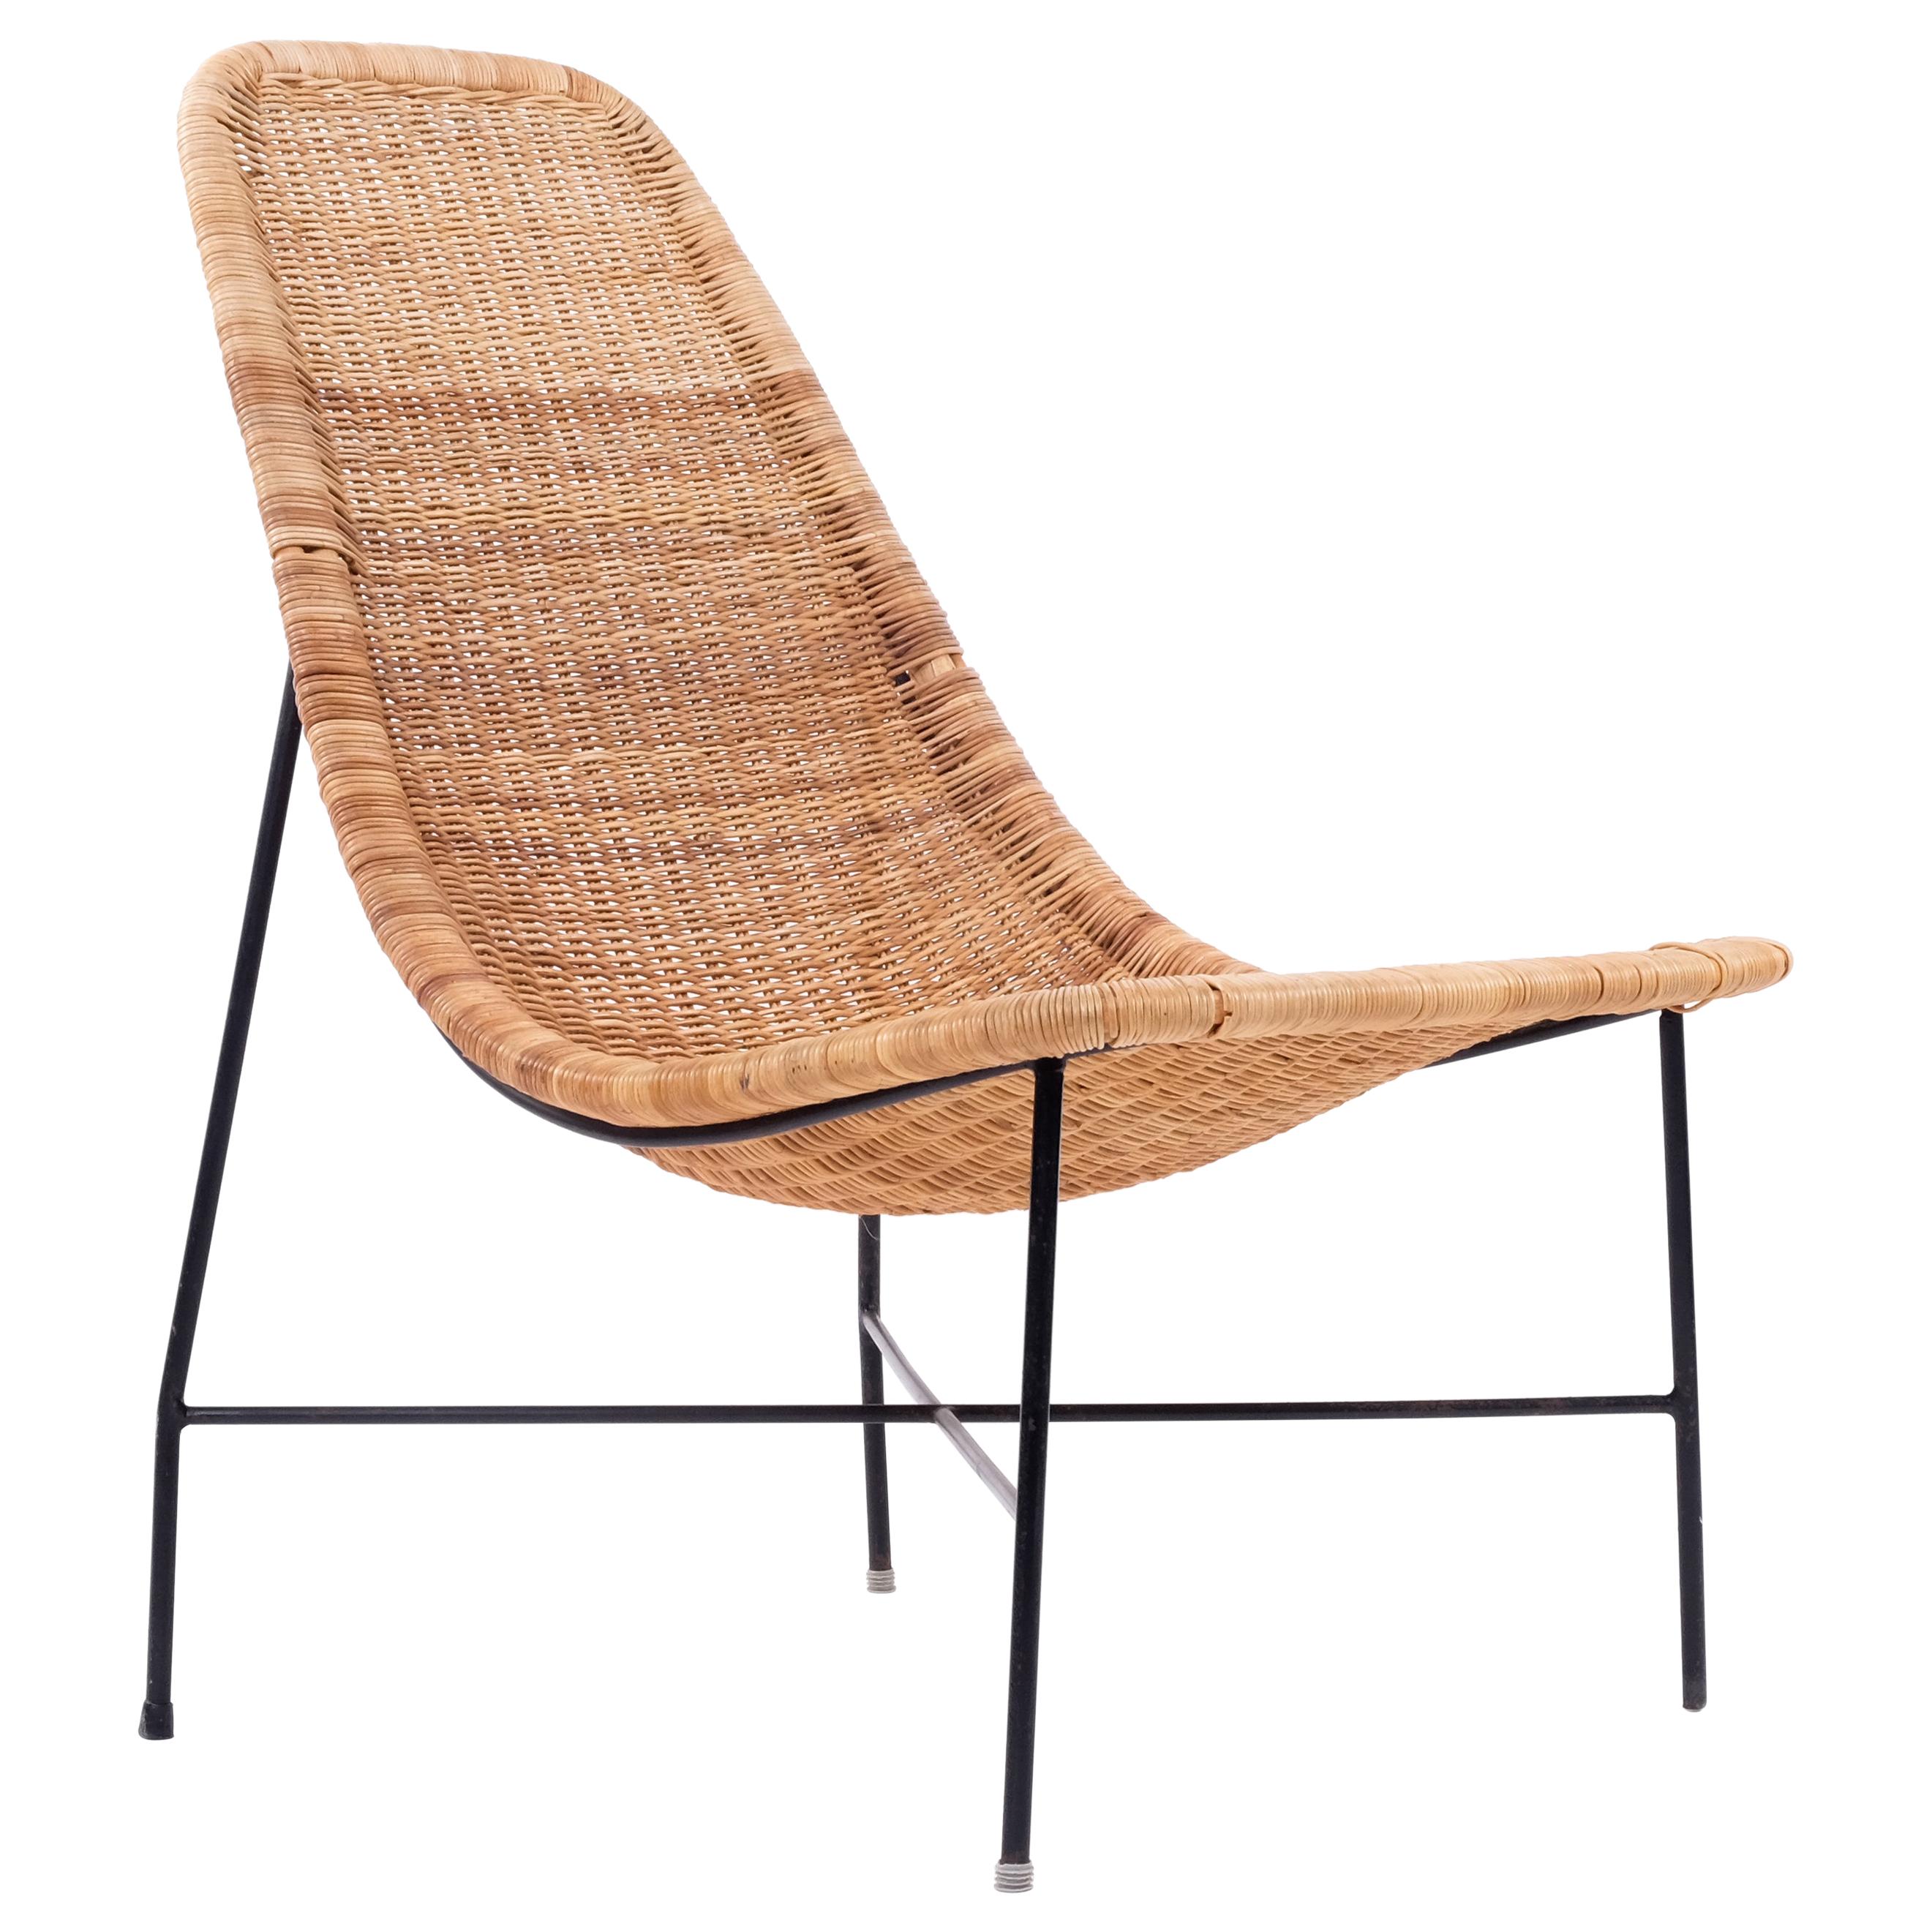 Swedish Rattan Chair, 1960s